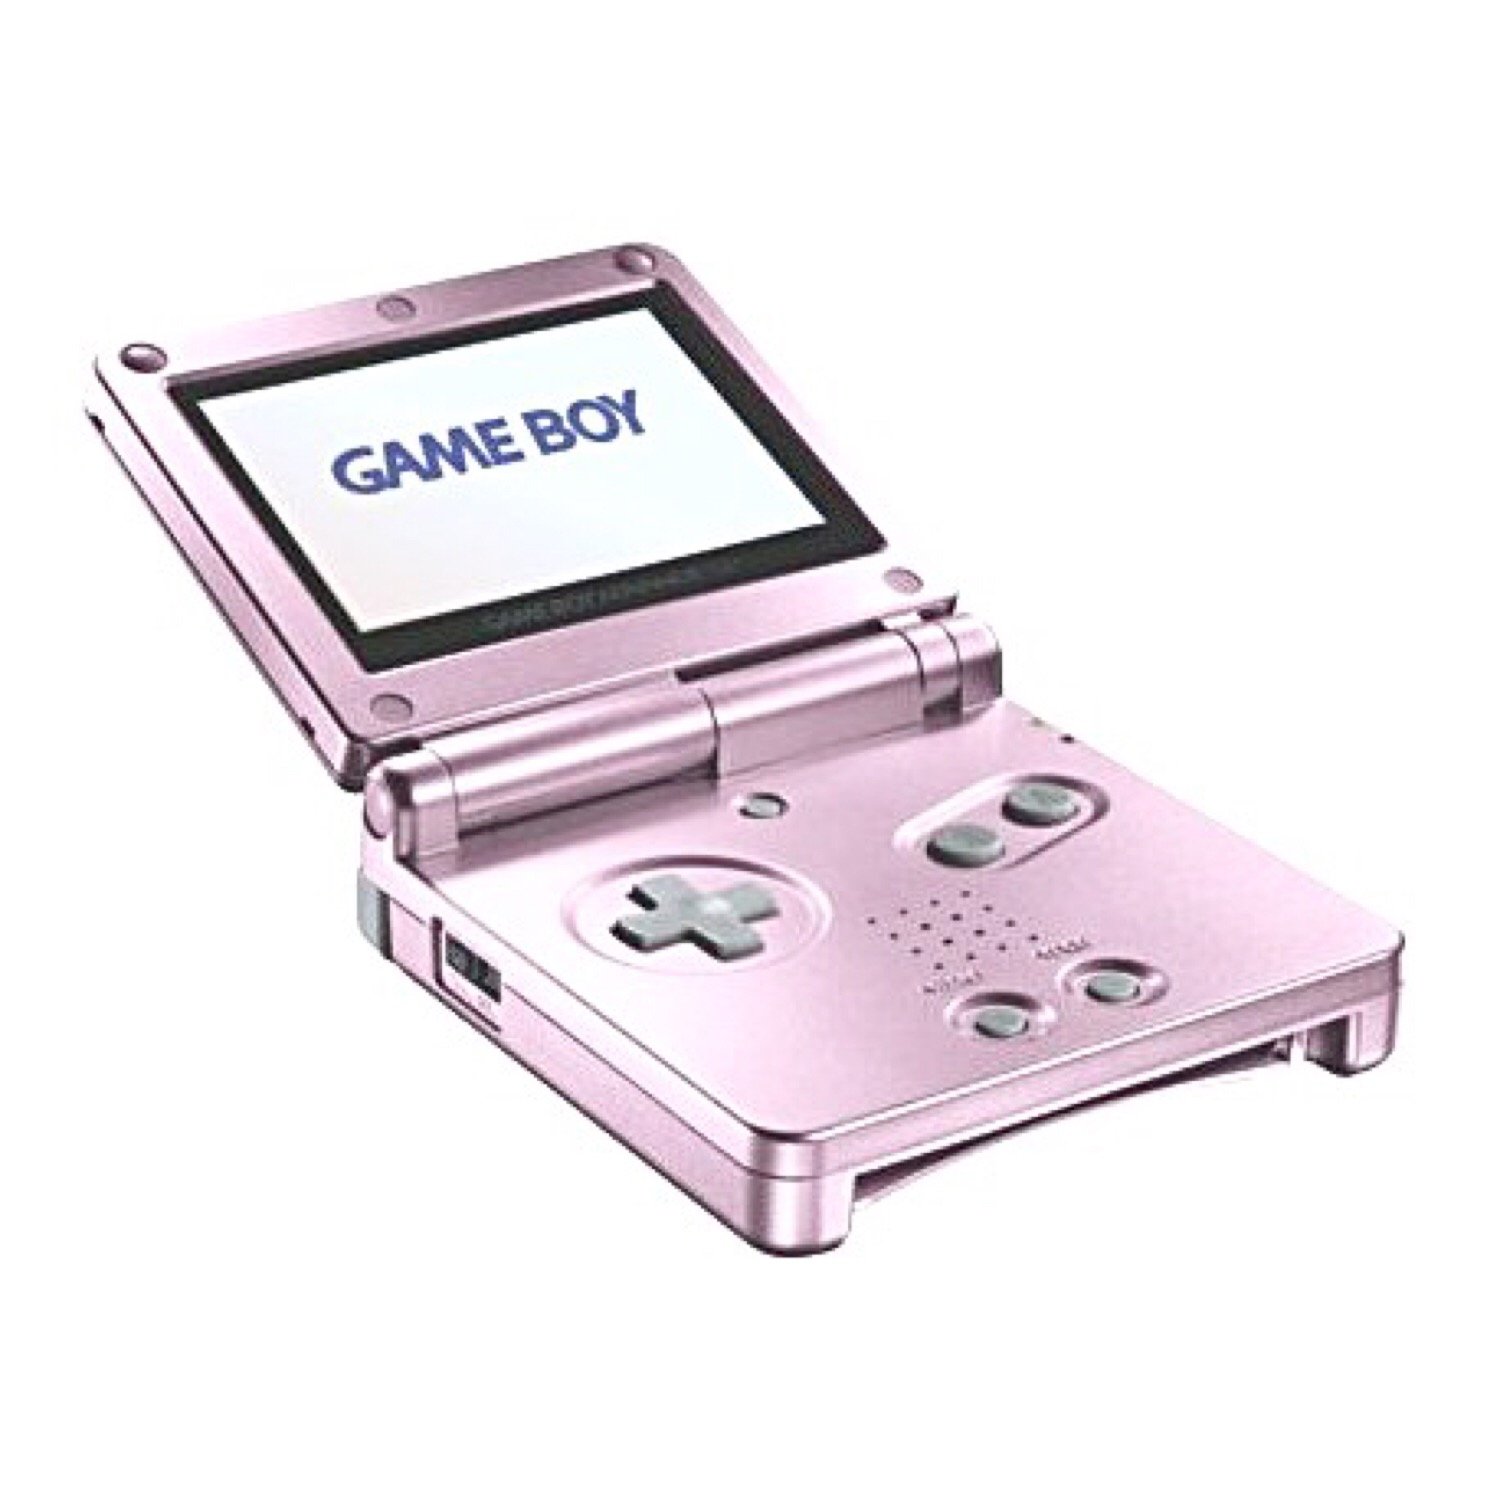 045496716738 - Game Boy Advance SP Console